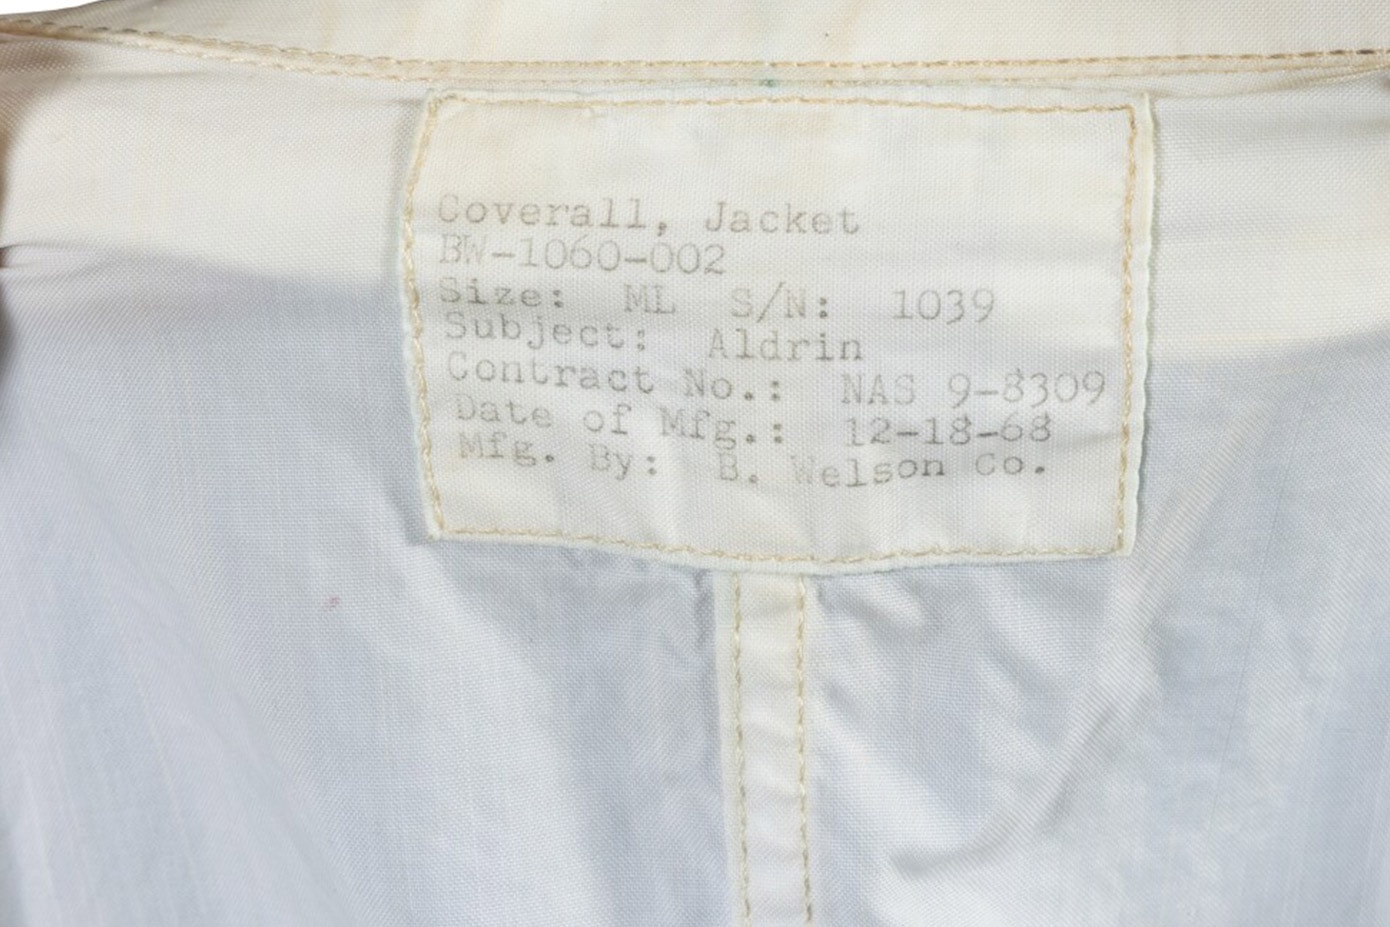 Sotheby's auction Buzz Aldrin Apollo 11 inflight coverall jacket $2.8 million usd auction sale 